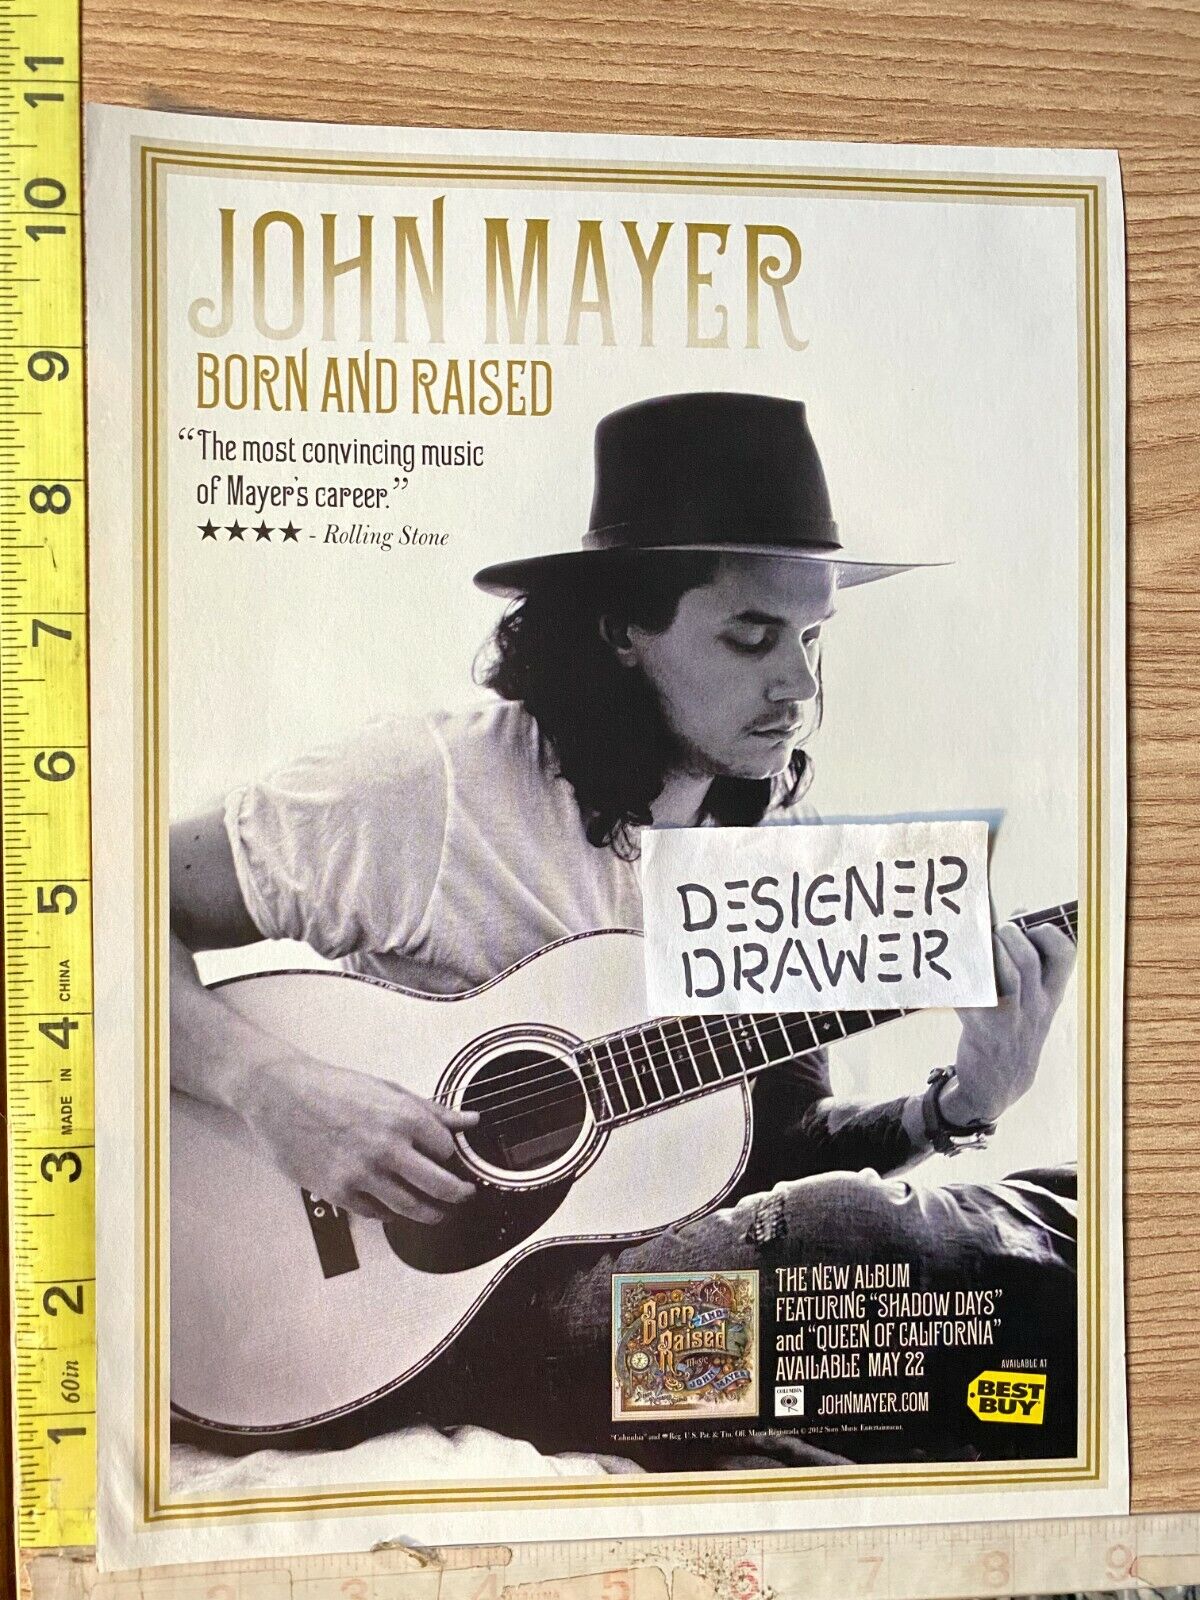 John Mayer Born And Raised Album 2012 Promotional Print Ad